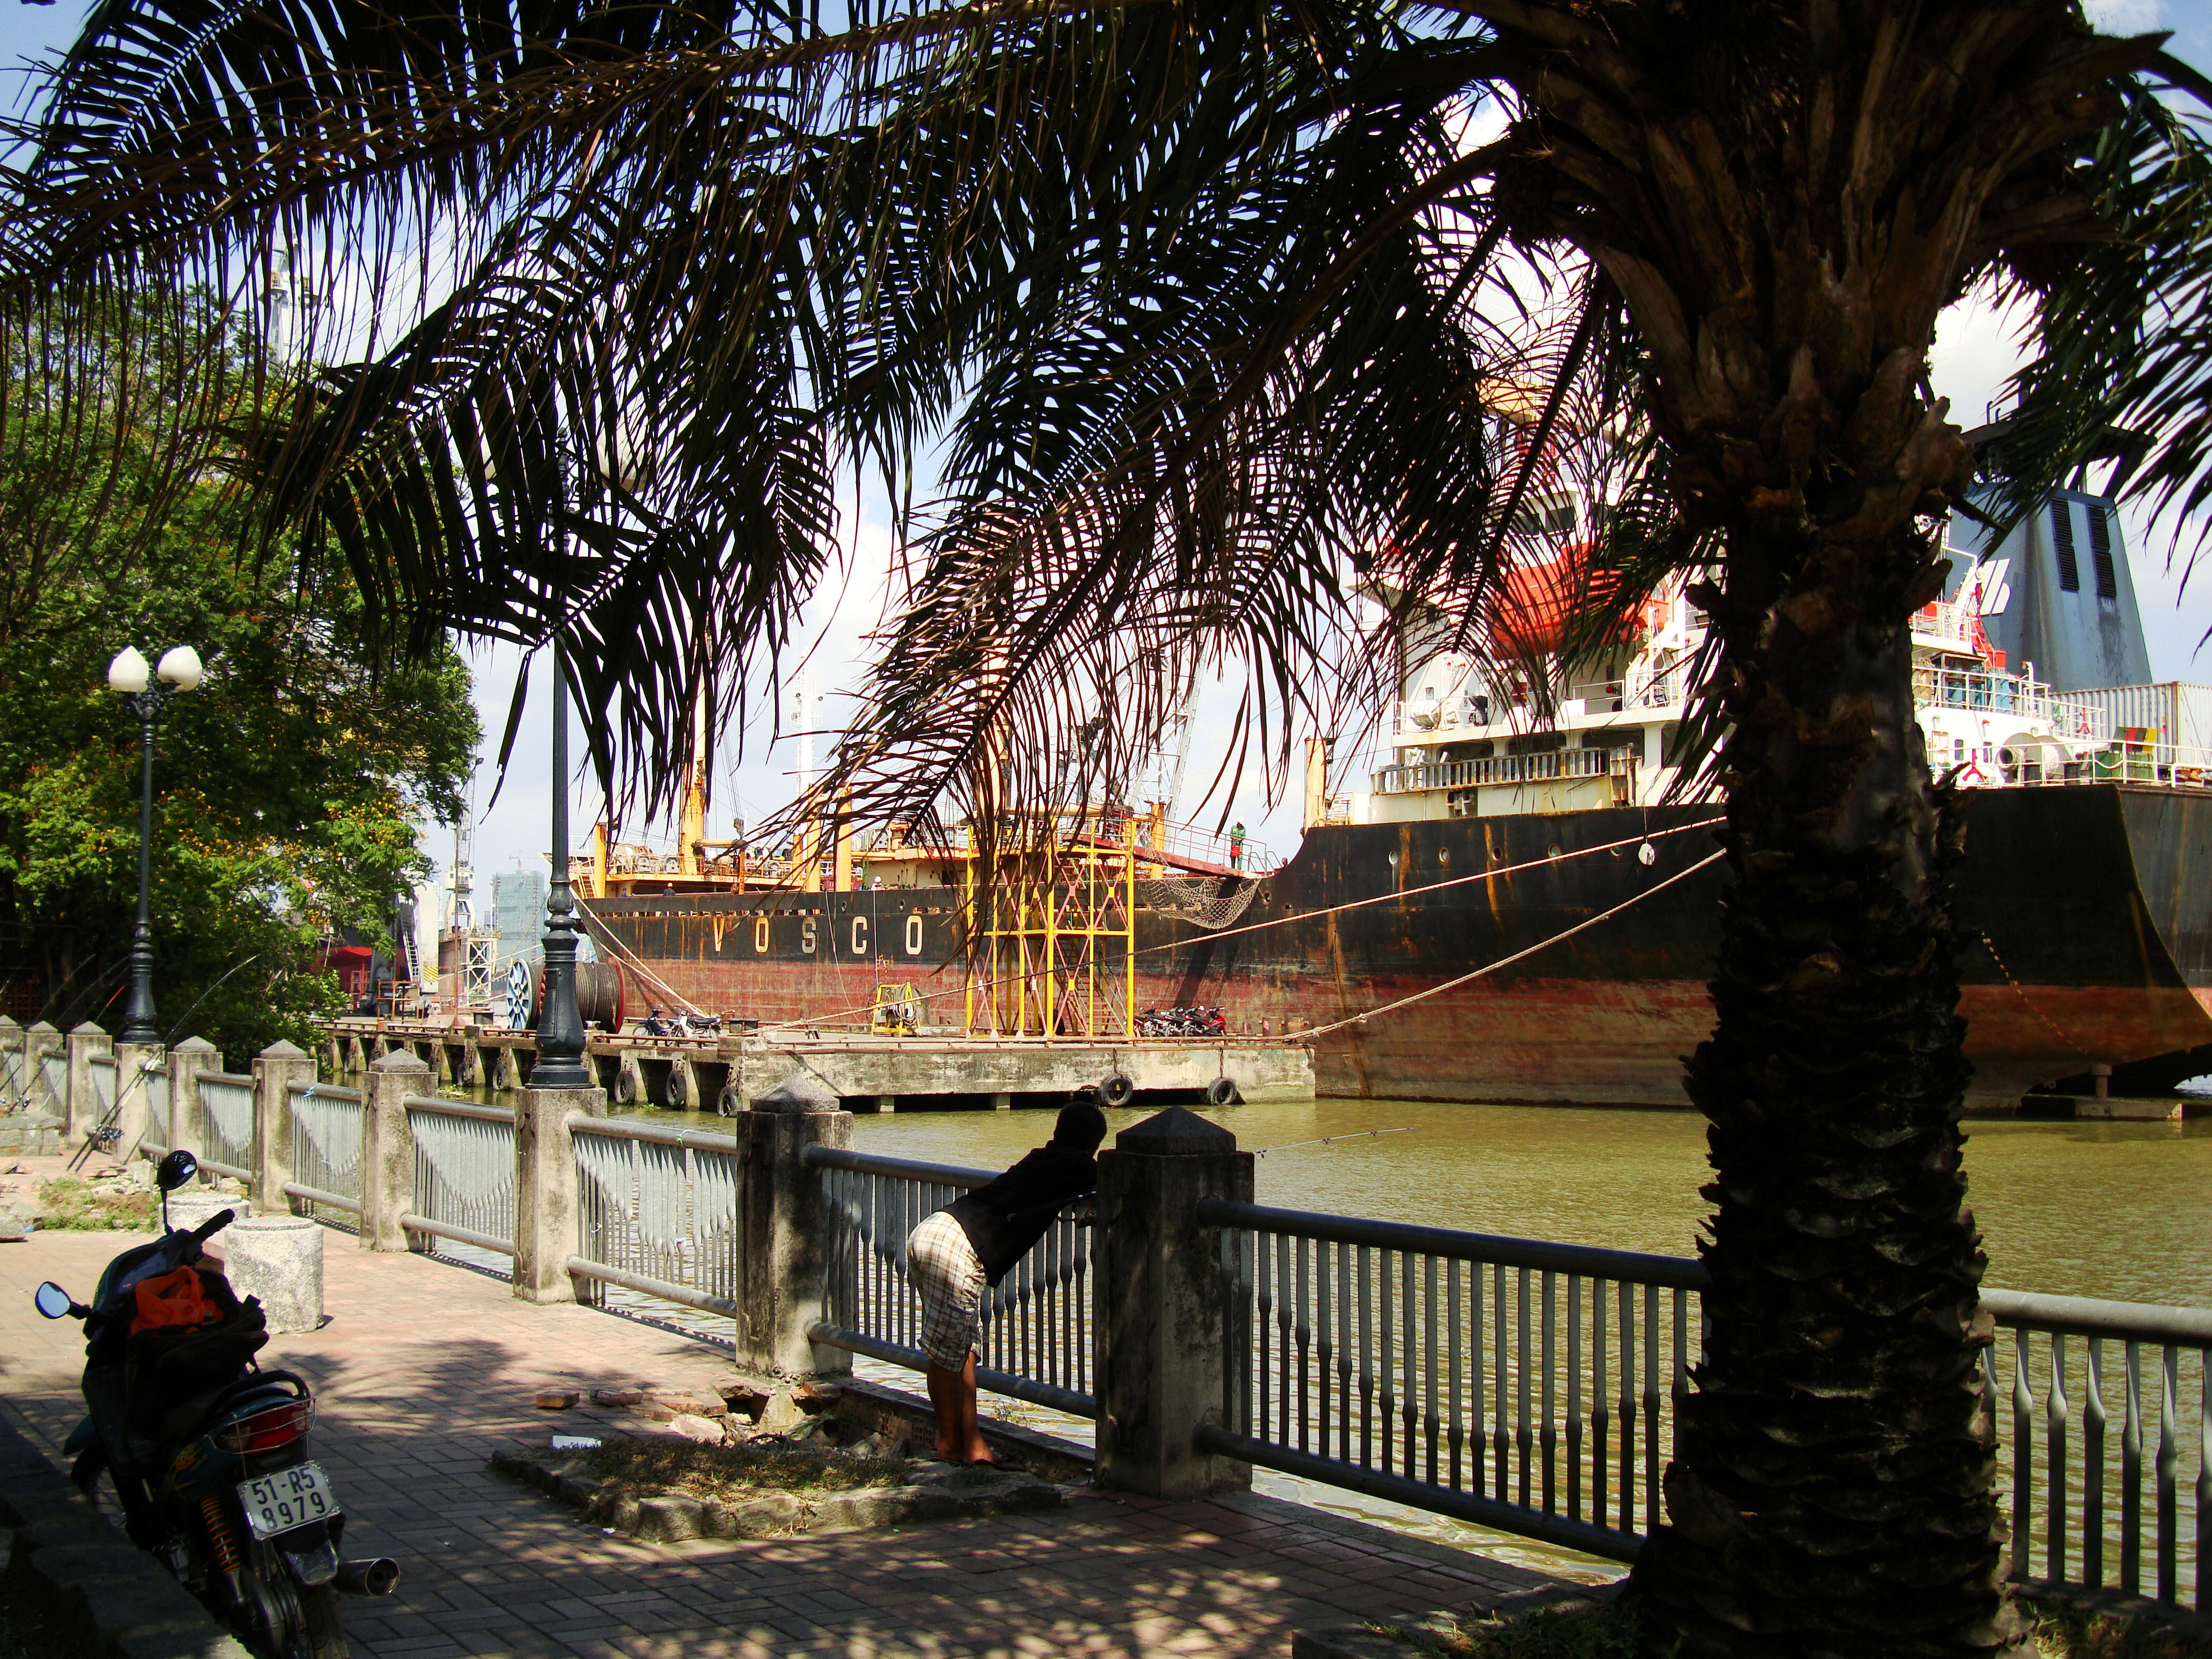 Vietnam HCMC Saigon river MS Vinh An Haiphong IND9251236 Nov 2009 02